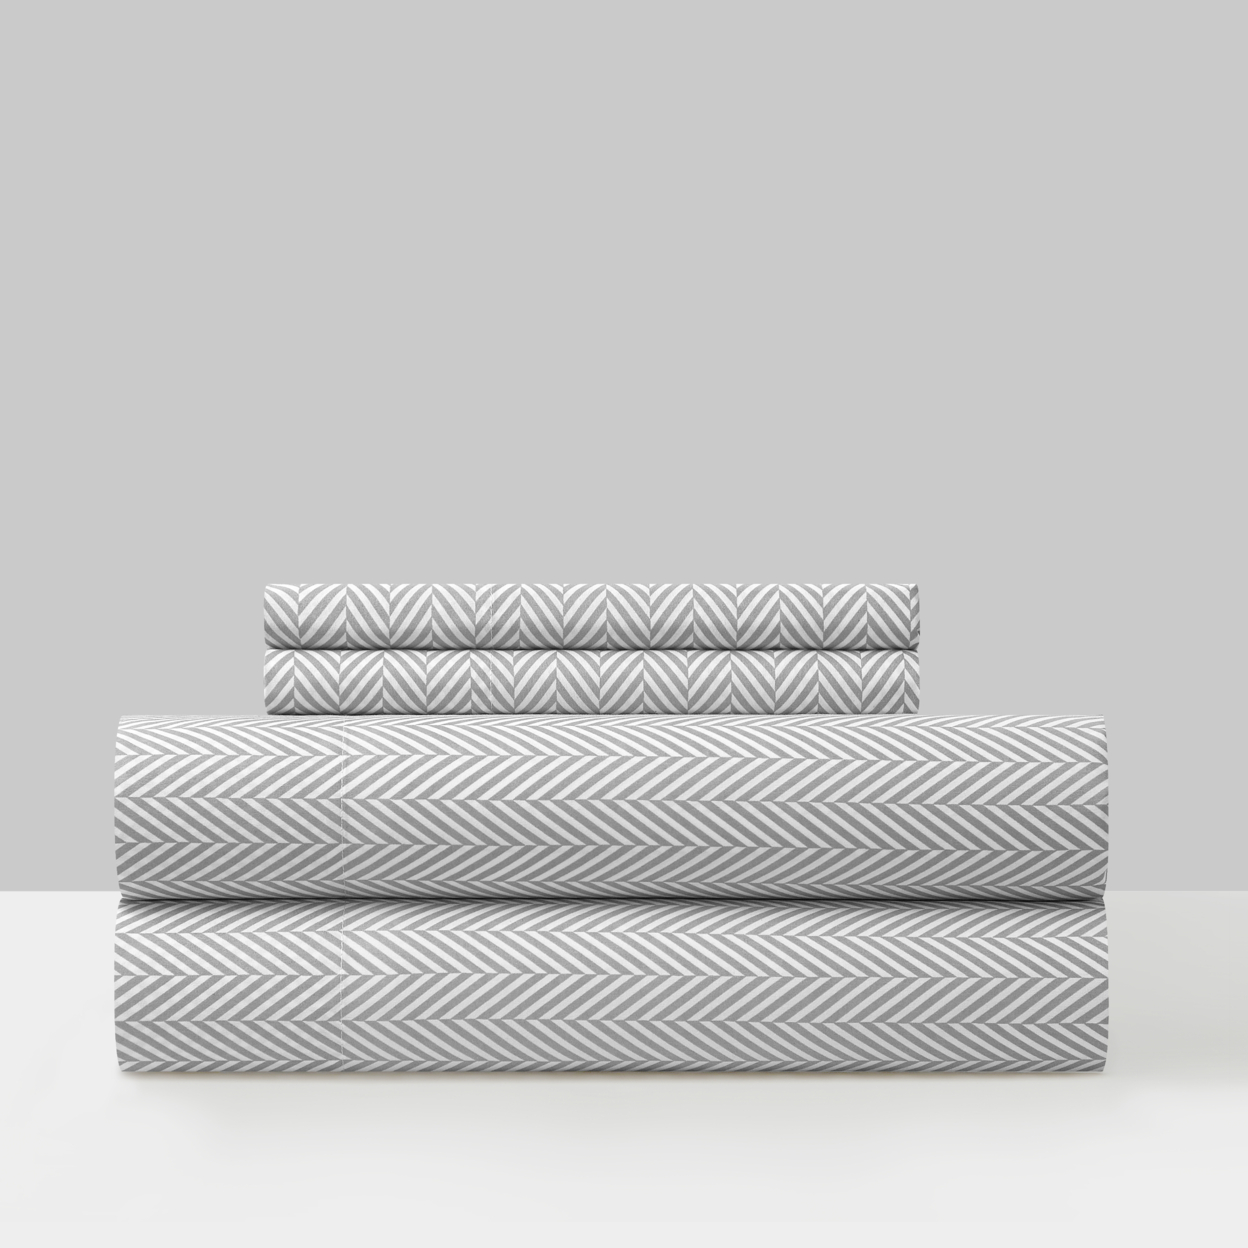 Enise 3 Or 4 Piece Sheet Set Super Soft Graphic Herringbone Print Design - Grey, Queen